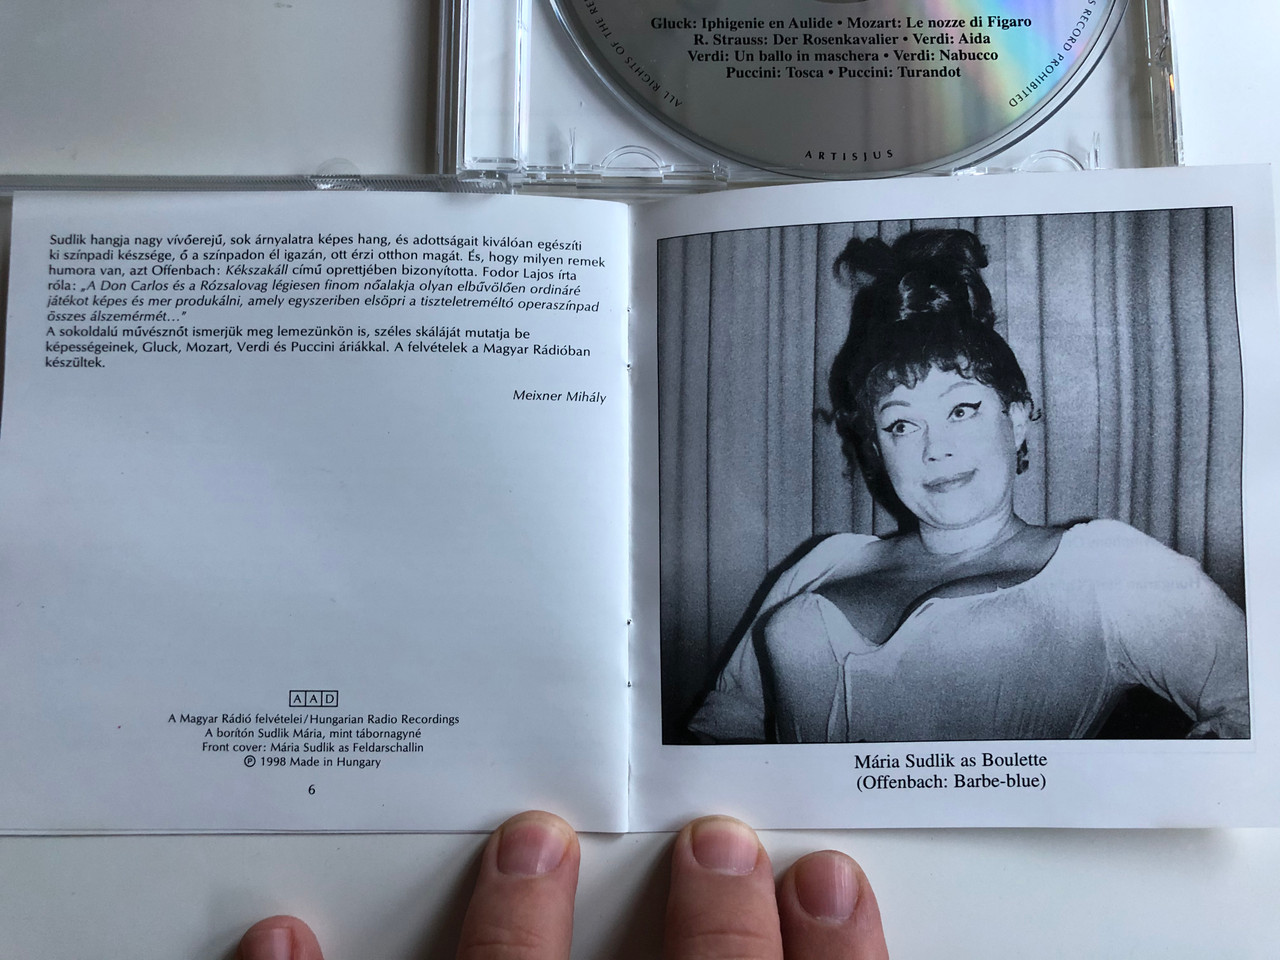 Famous Operatic Recital - Maria Sudlik, soprano / Gluck, Mozart, R.  Strauss, Verdi, Puccini / Audio CD 1998 Stereo / BR 0101 - bibleinmylanguage